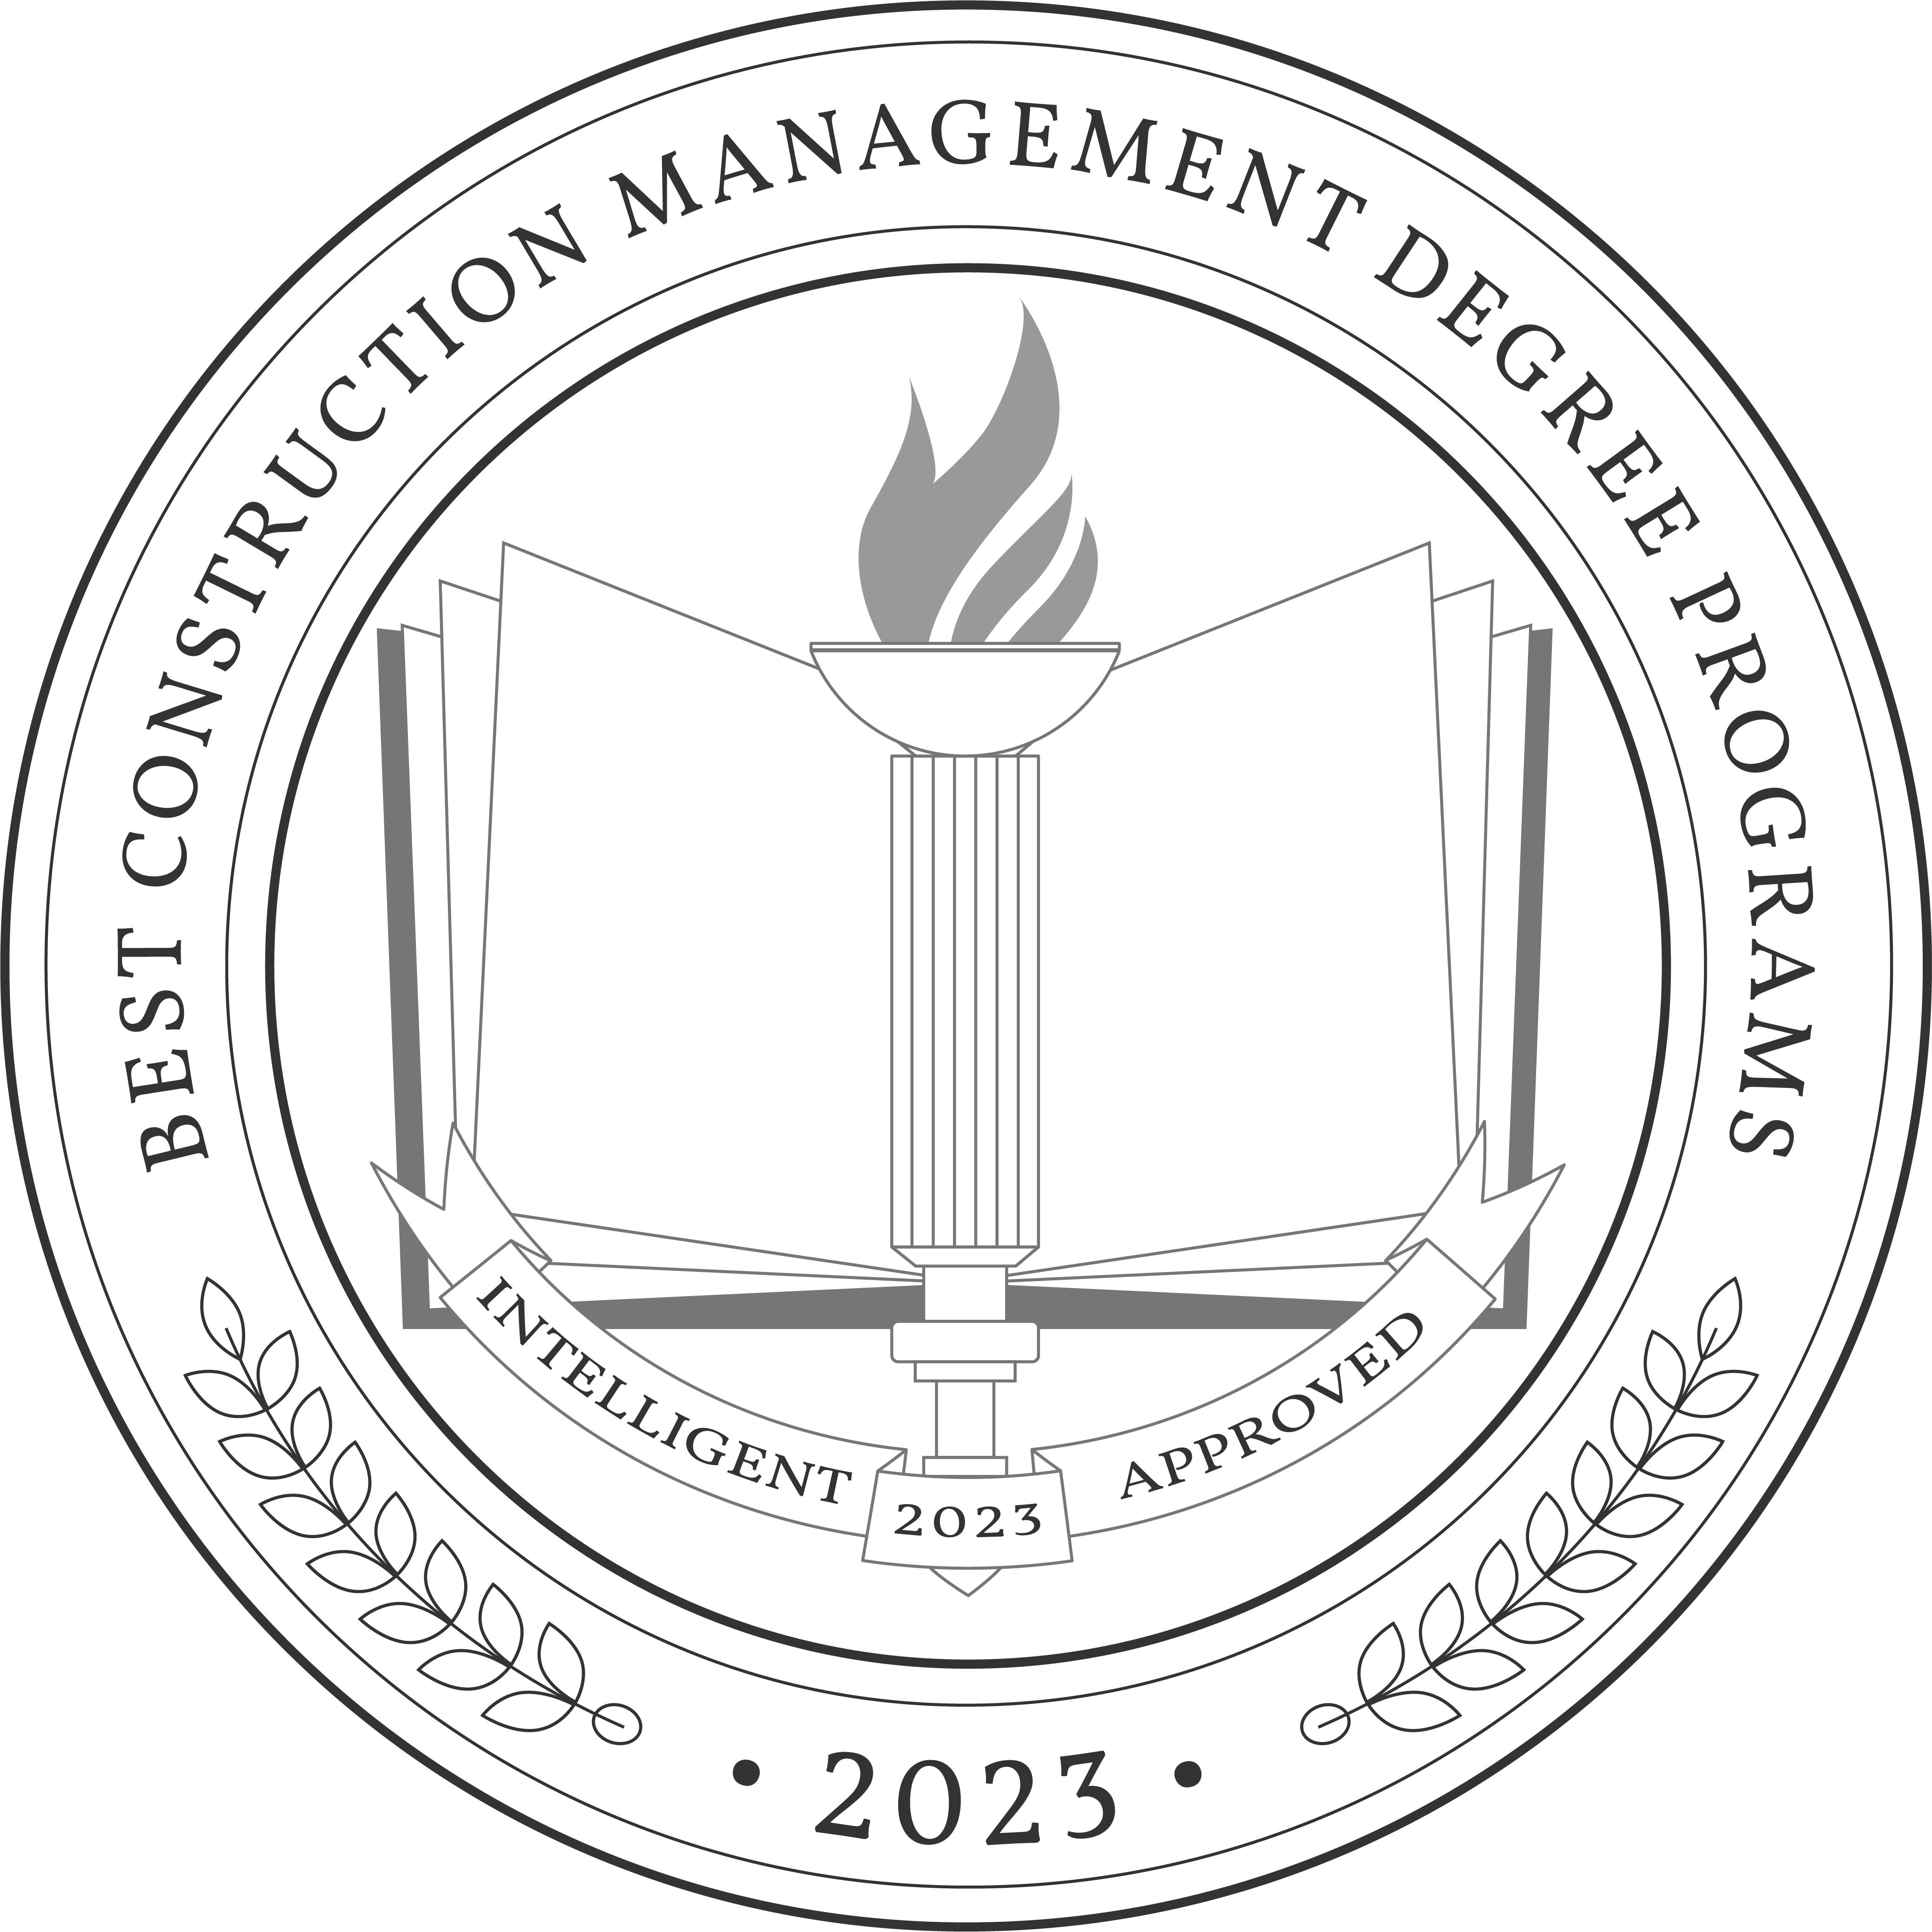 Best Construction Management Degree Programs 2023